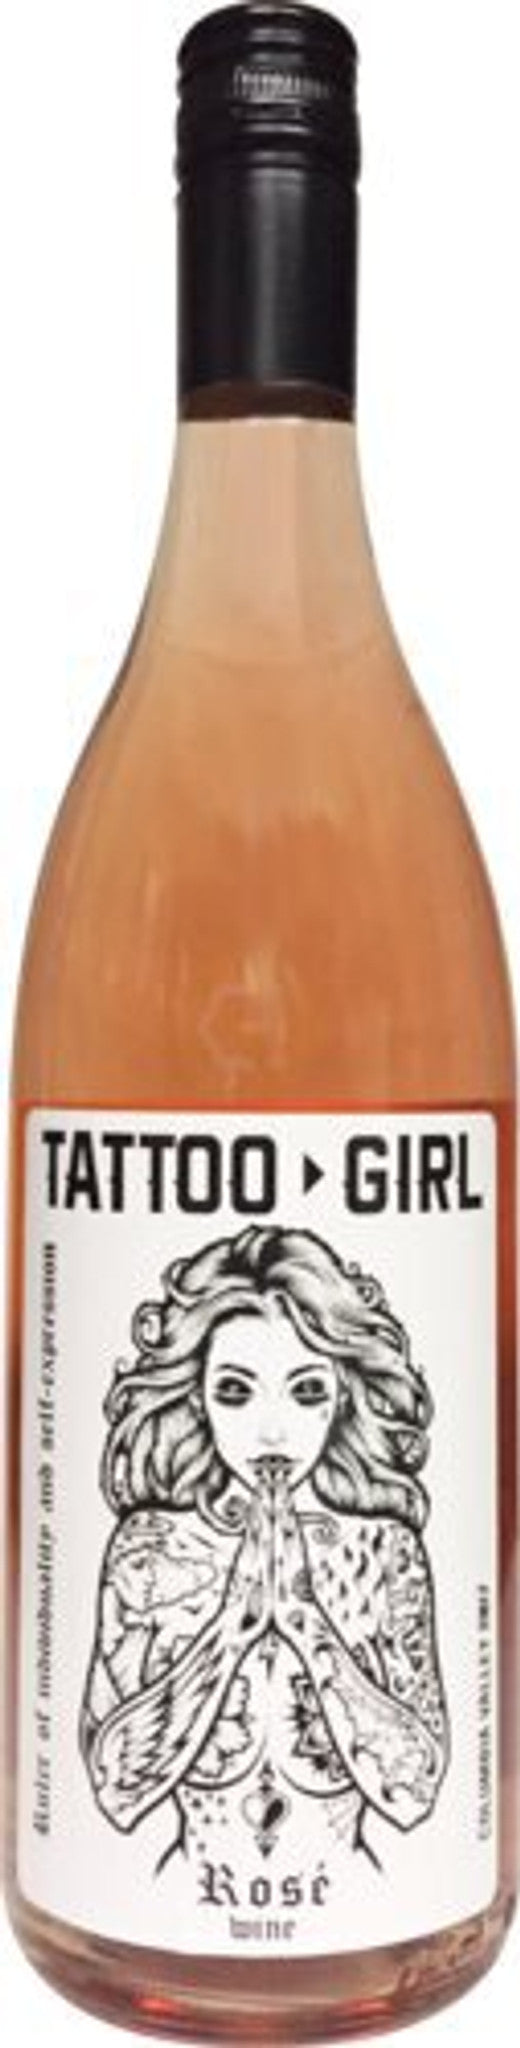 Tattoo Girl Columbia Valley Rose 2021